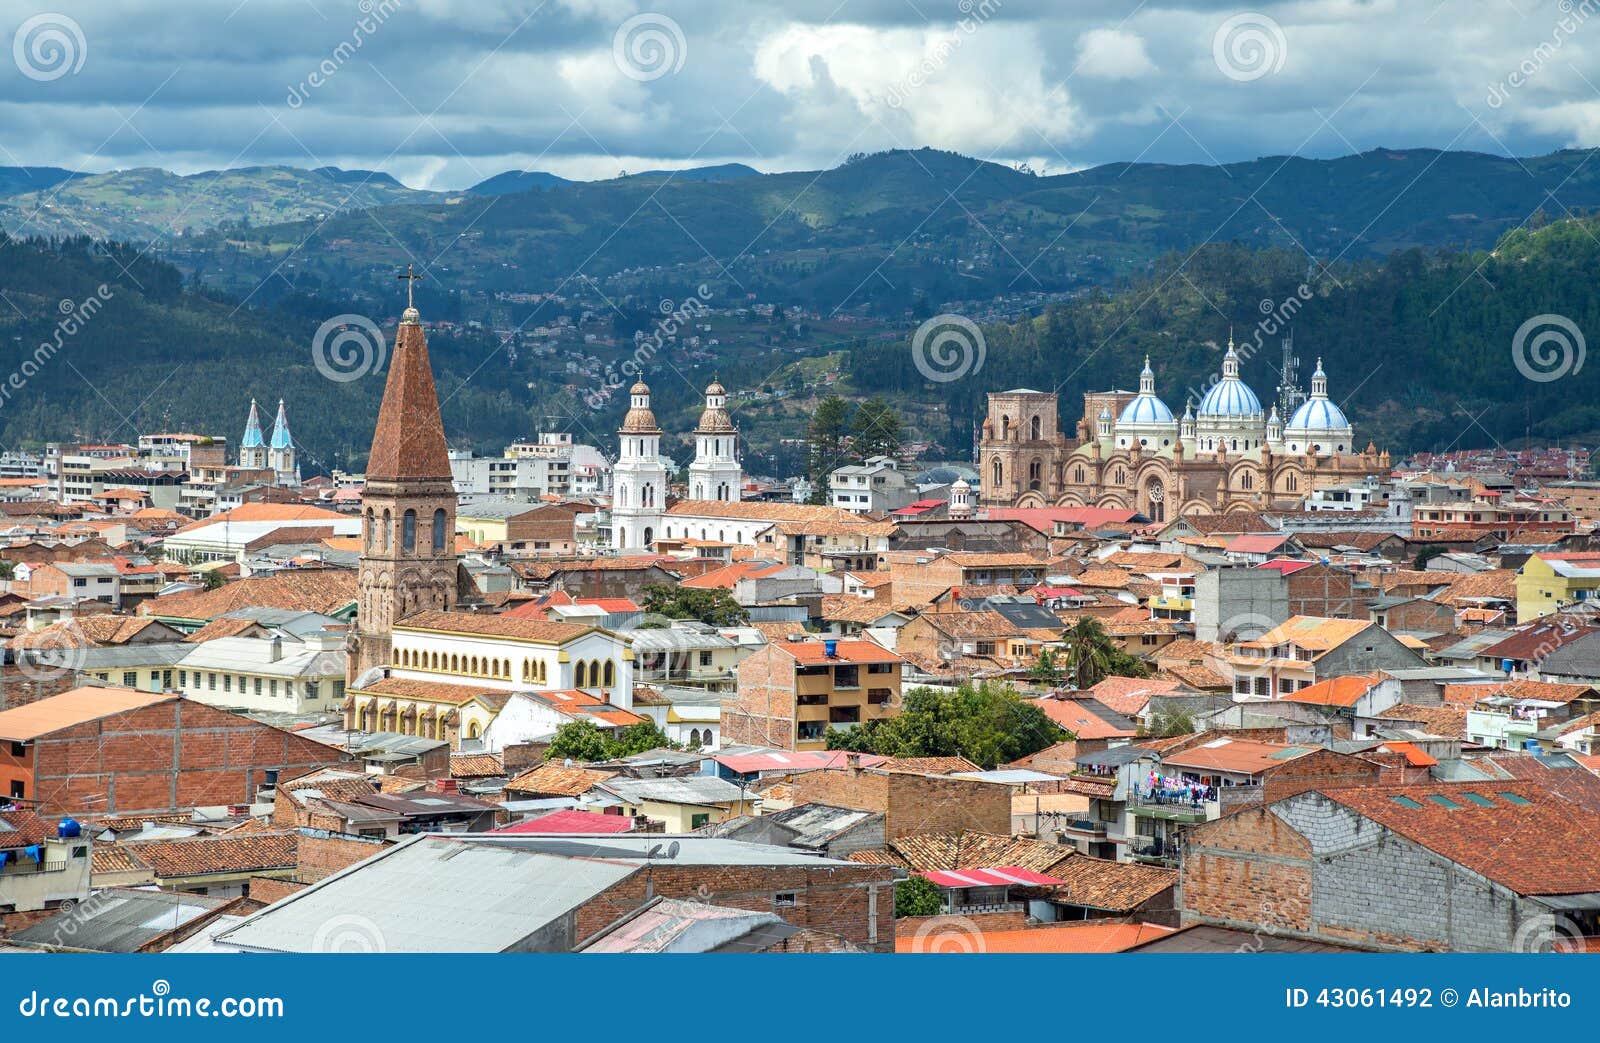 view of the city of cuenca, ecuador